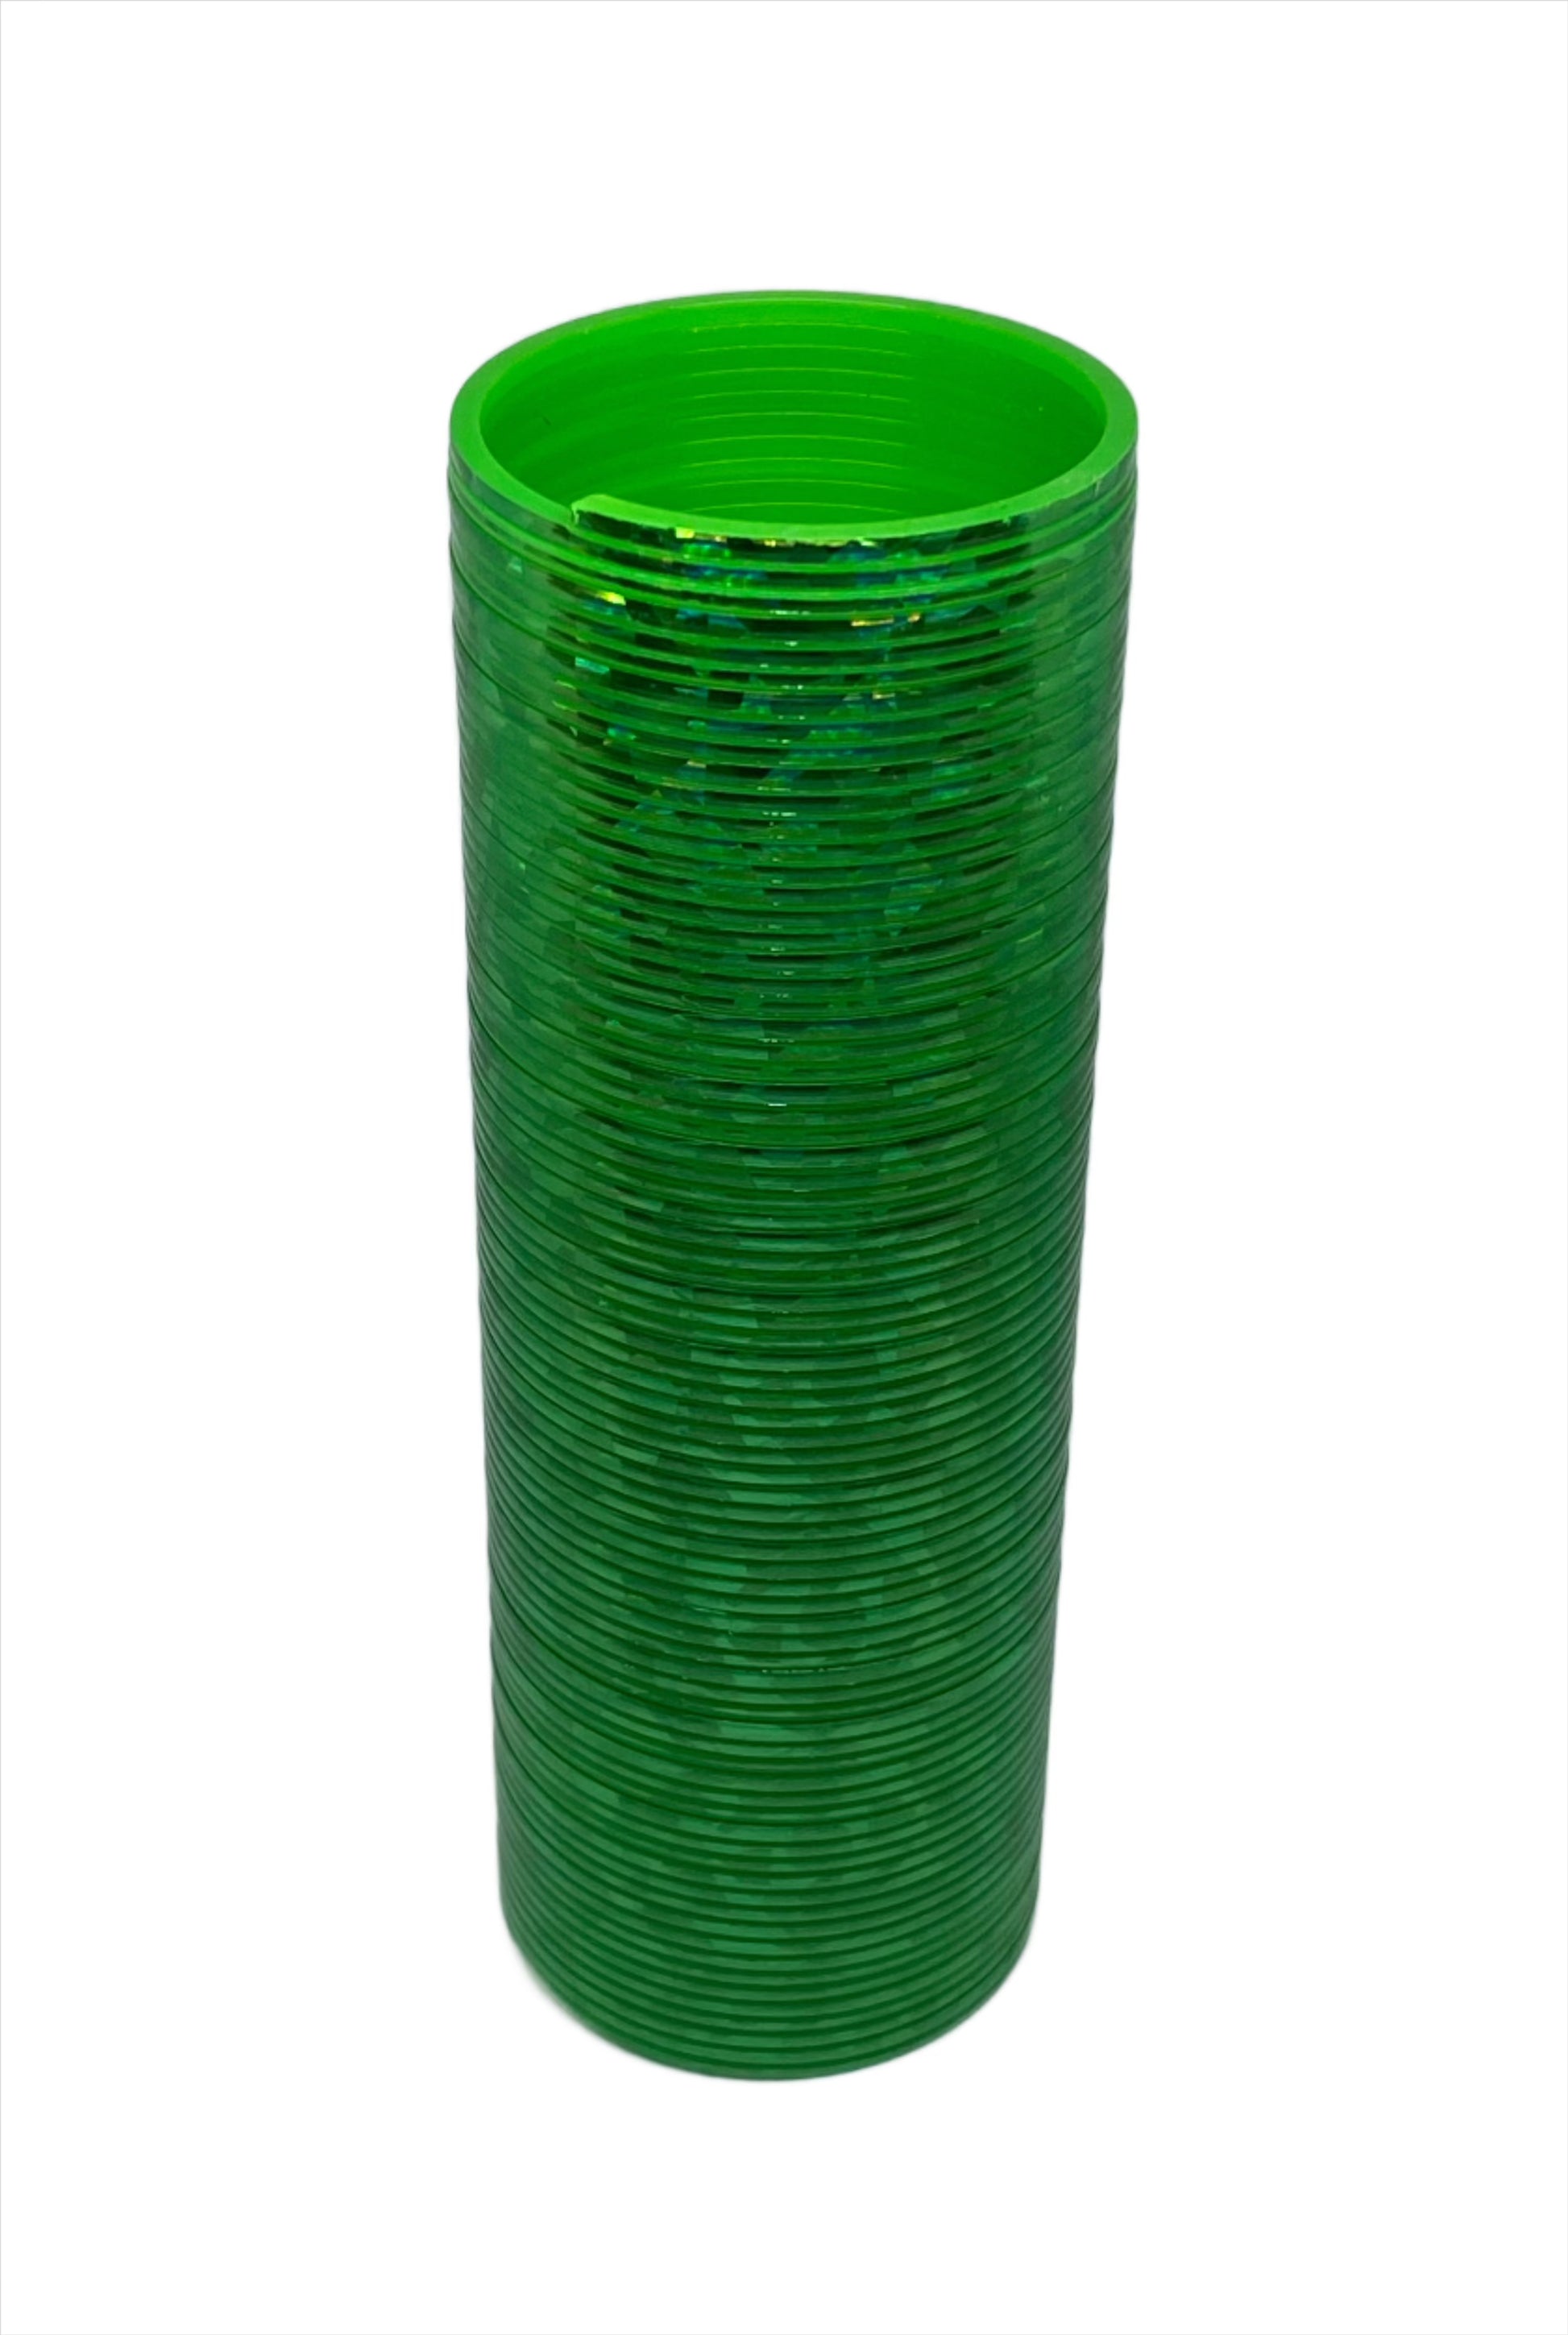 Tall green plastic magic spring